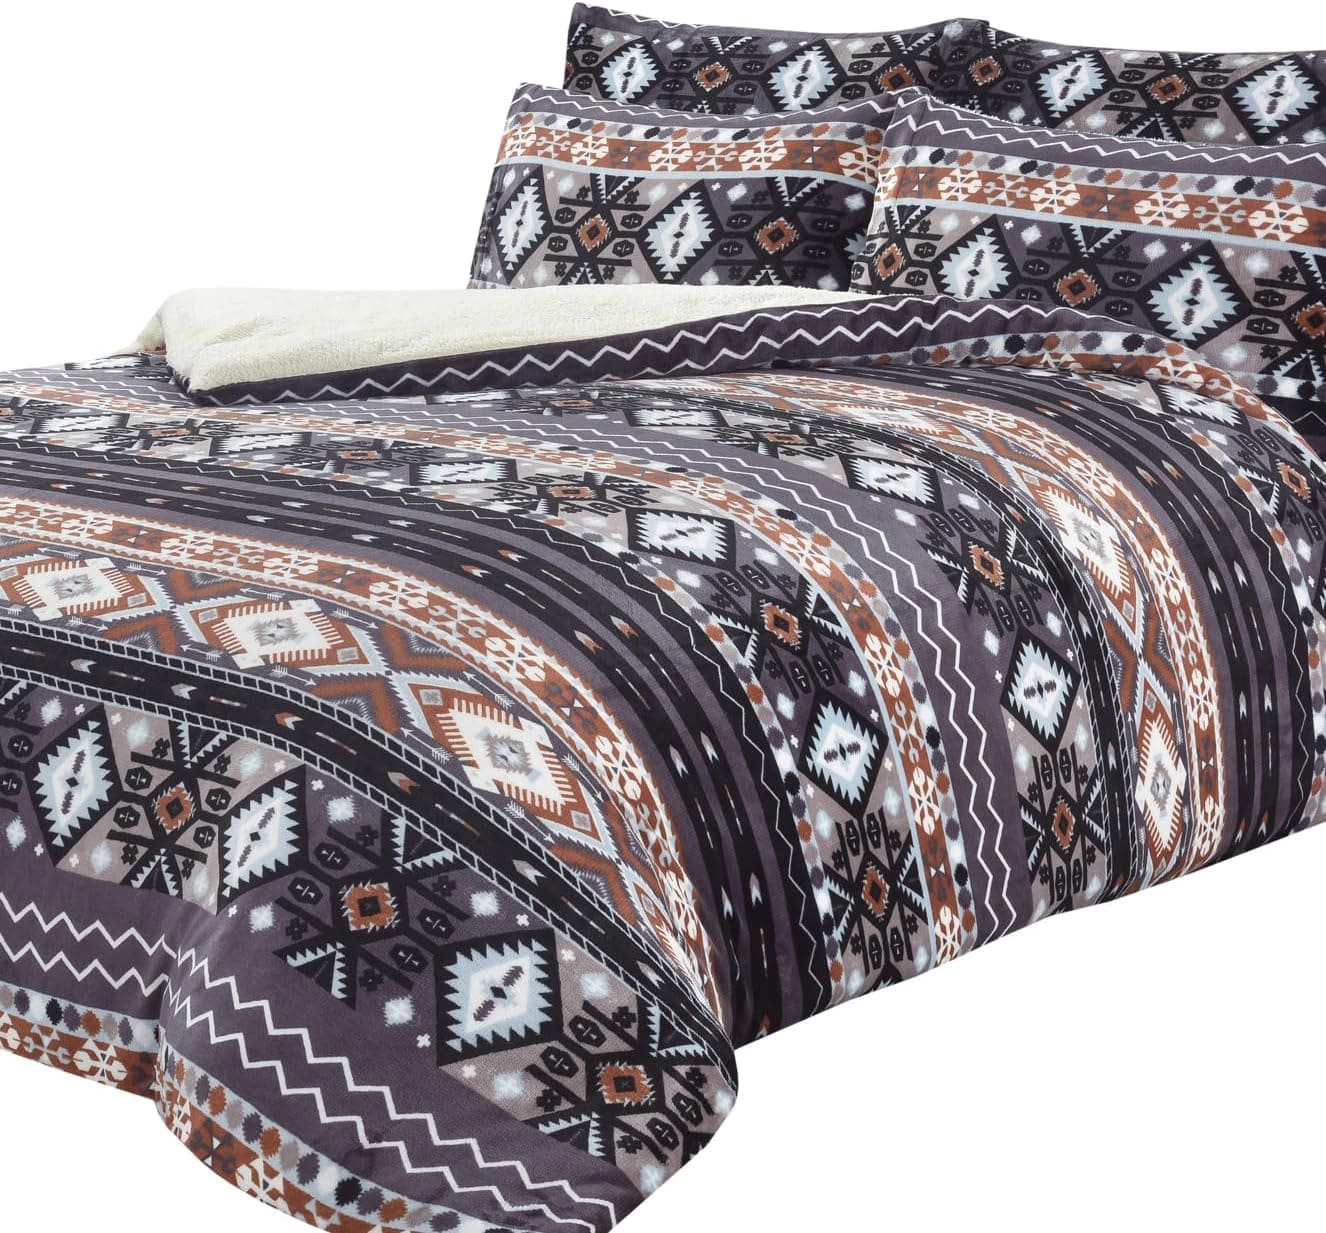 Aztec Teddy Fleece Duvet Cover Set With Pillow Cases Quilt Bedding Sets OLIVIA ROCCO Duvet Cover